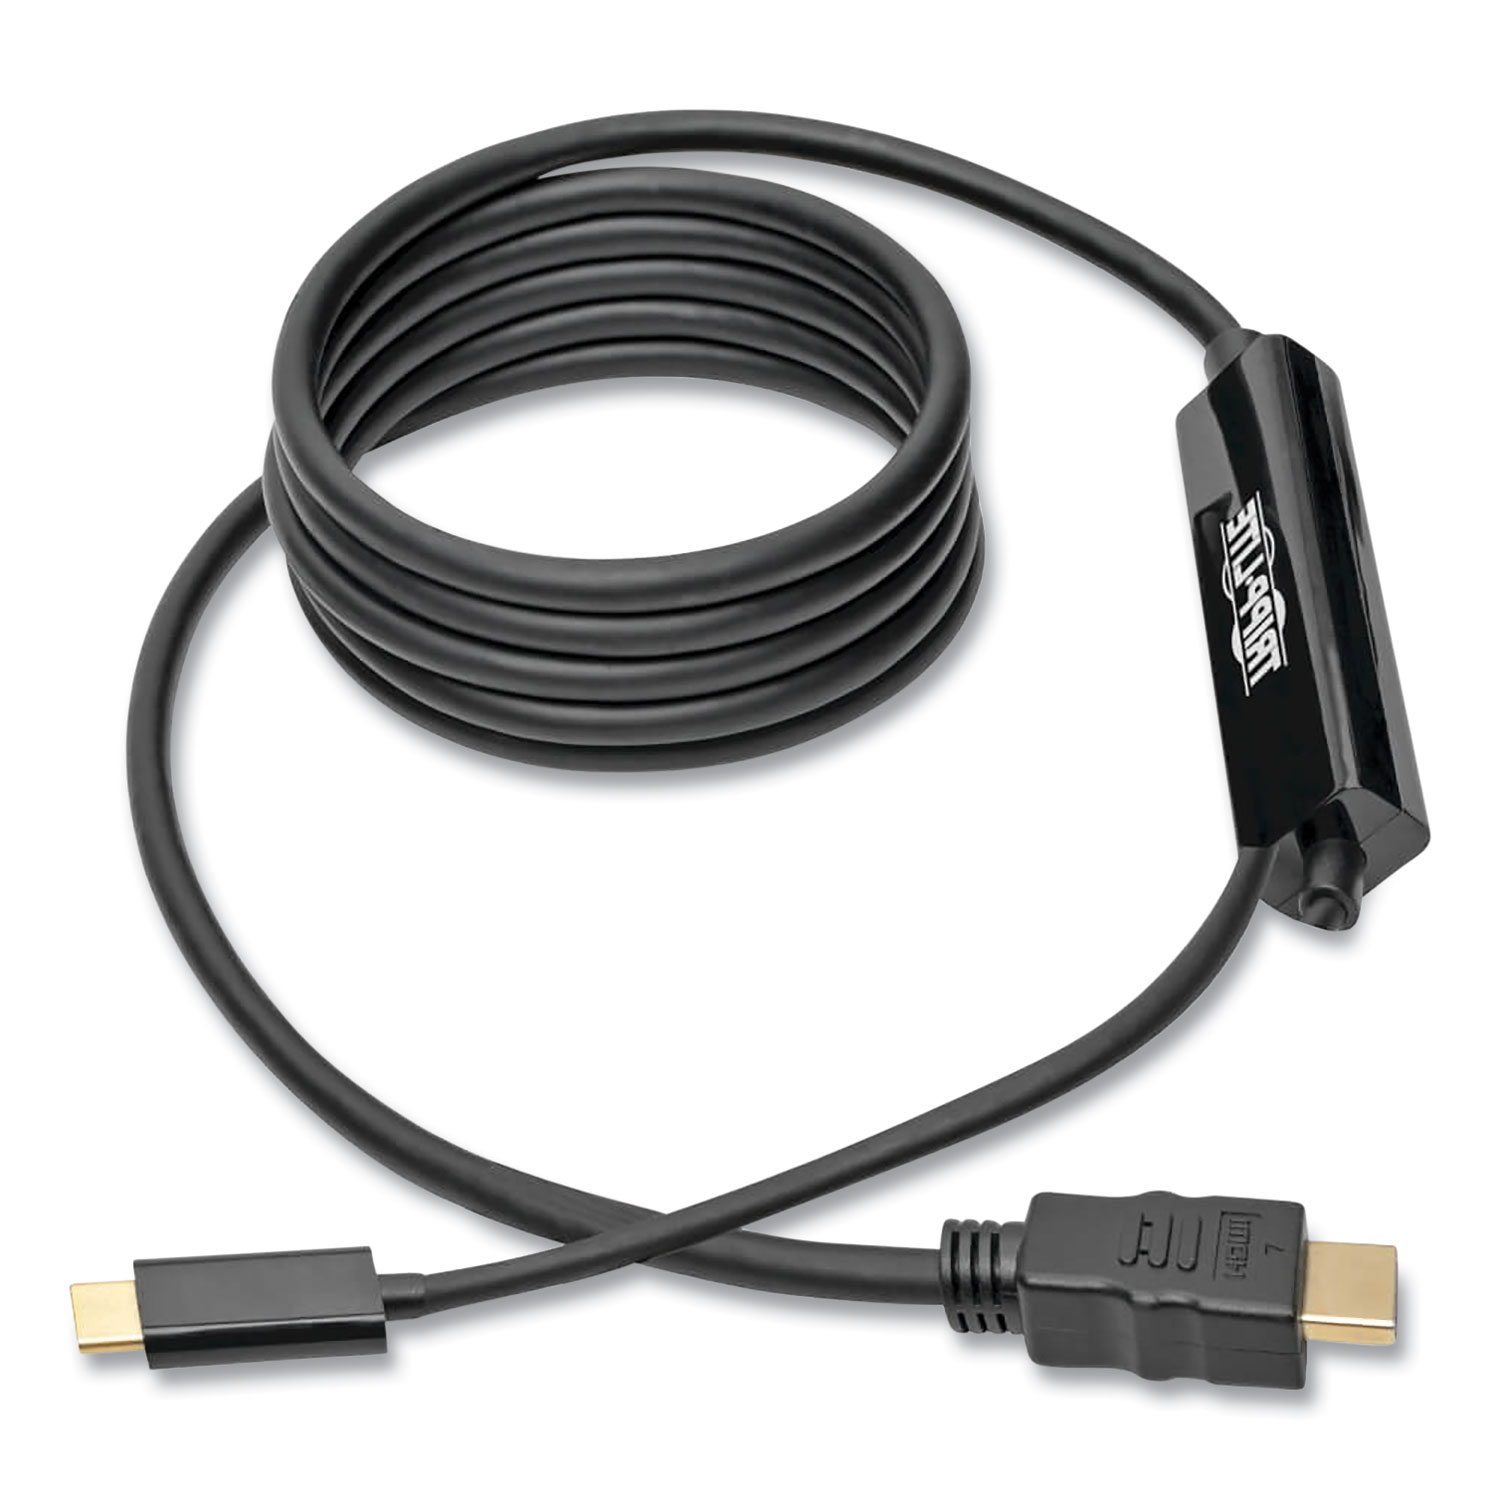 onn. 3' Display Port to Display Port Cable, Black